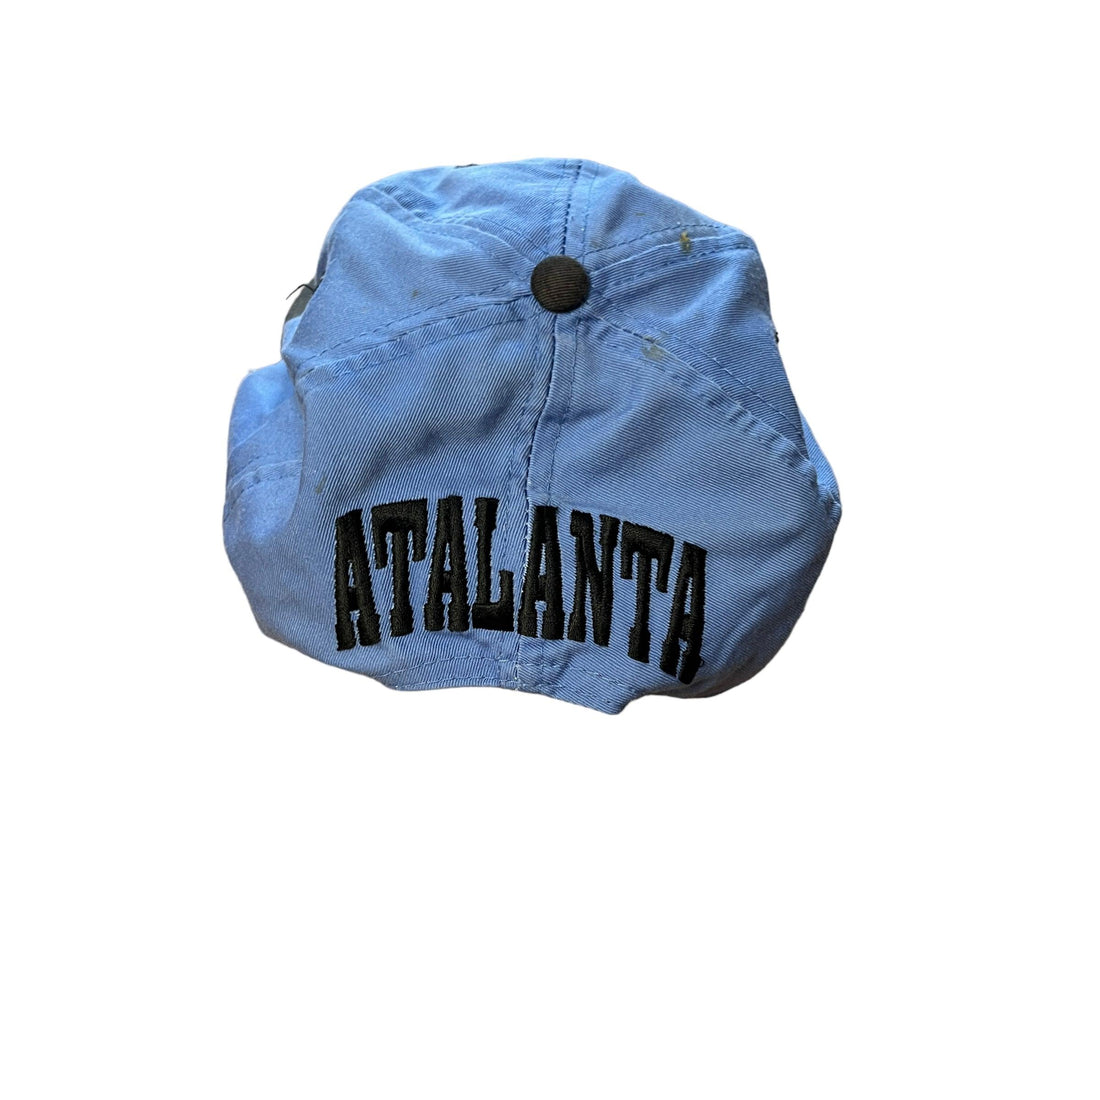 Vintage Blue + Black Atlanta Football Cap - The Streetwear Studio